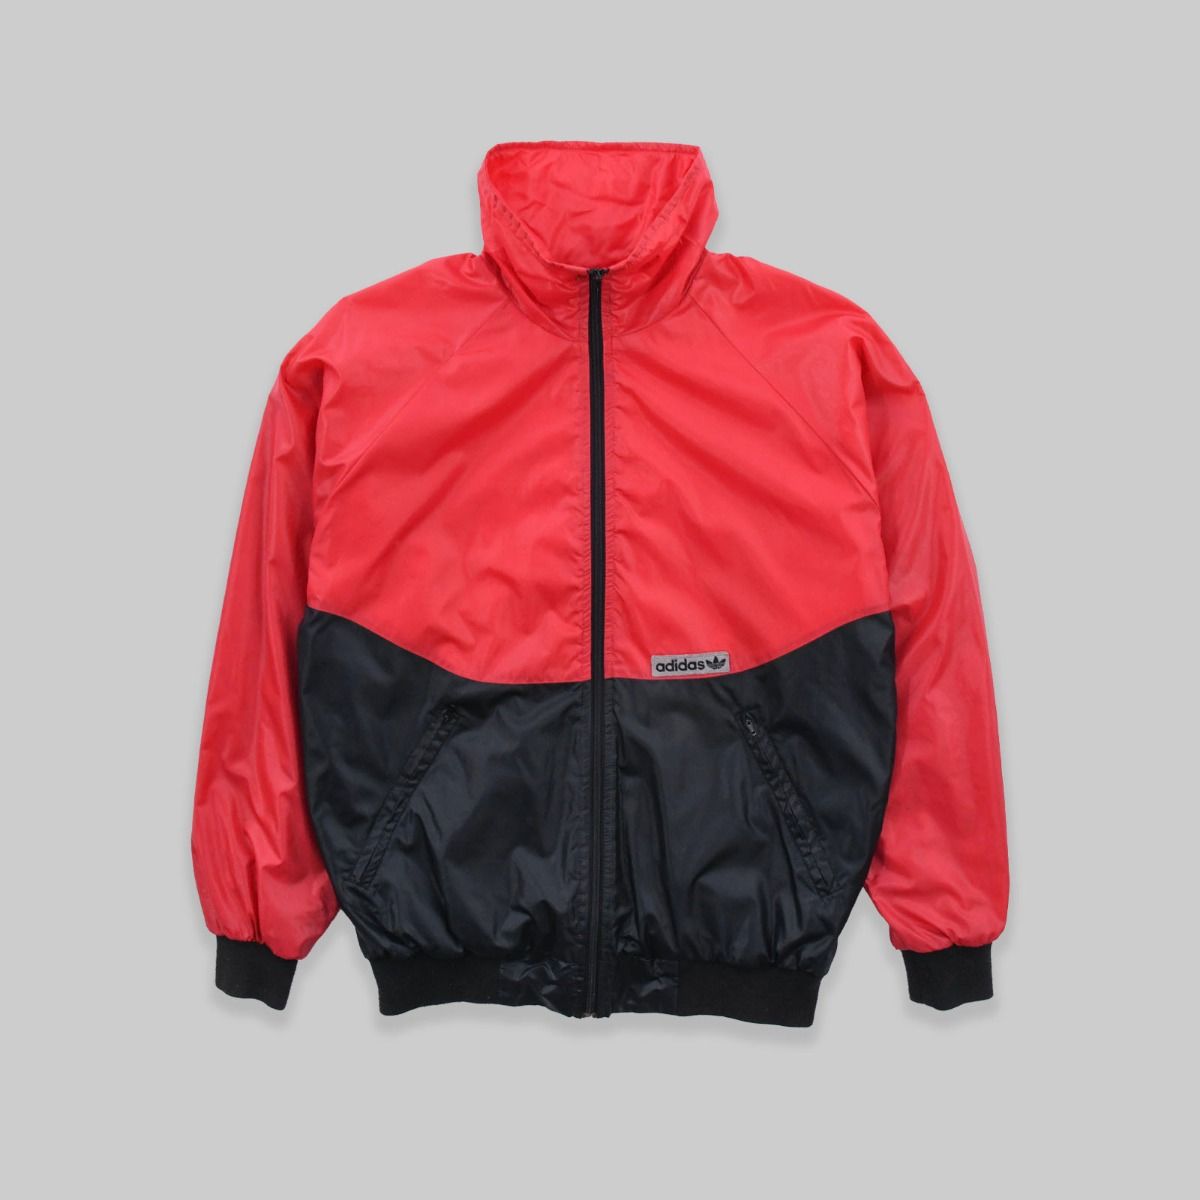 Adidas 1980s Shell Jacket